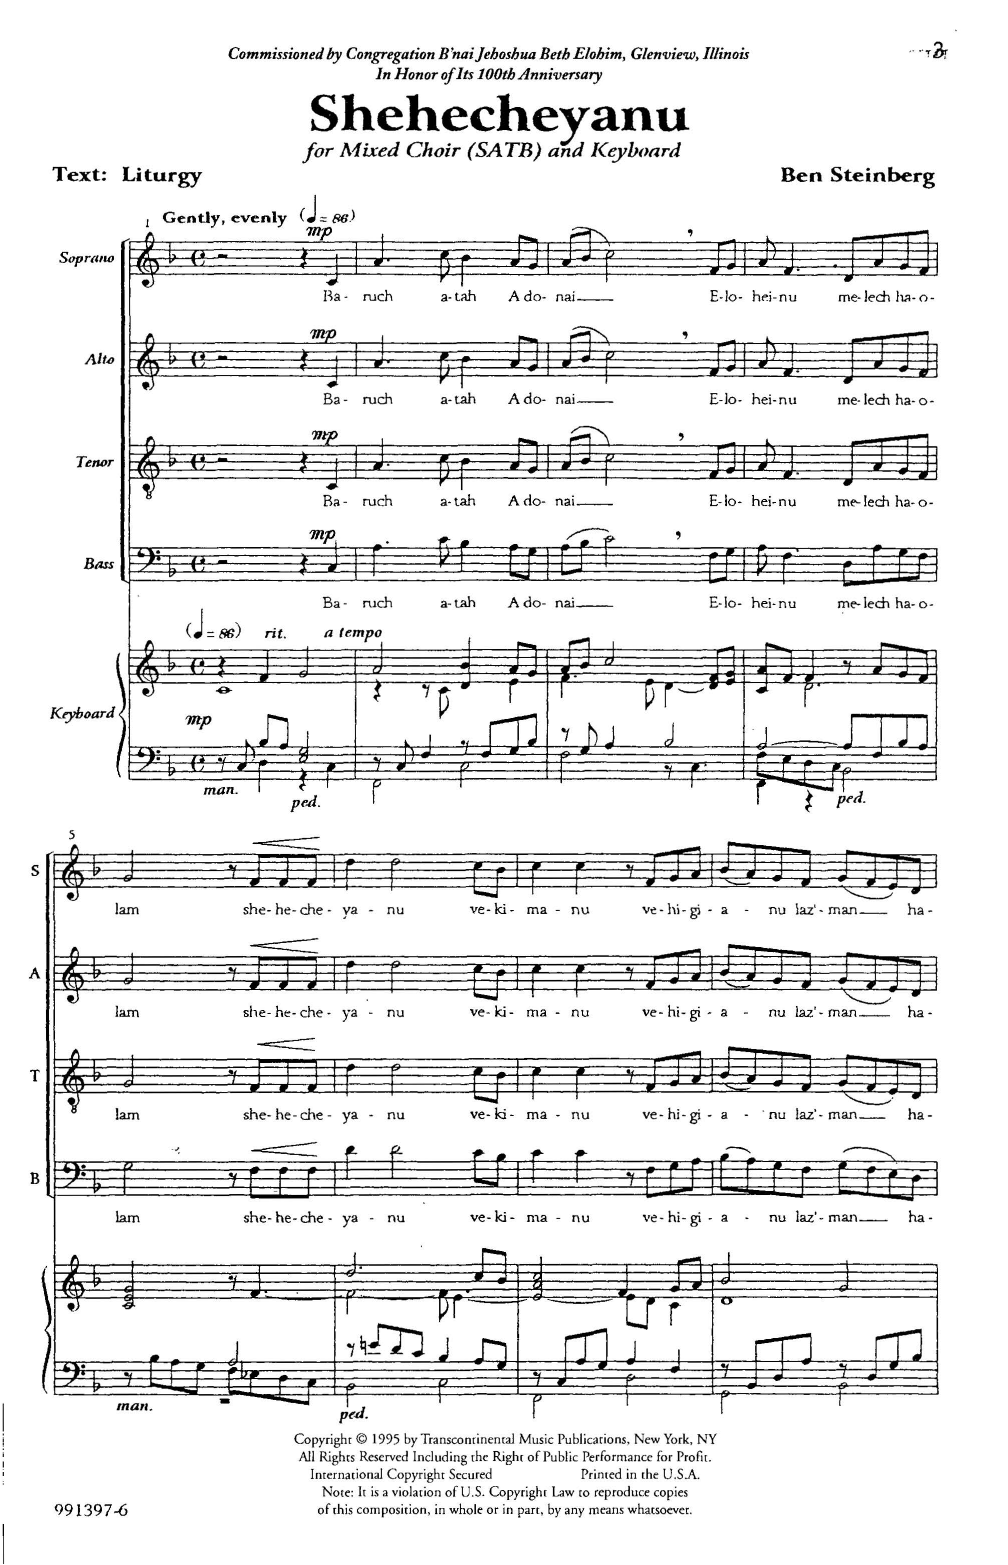 Ben Steinberg Shehecheyanu Sheet Music Notes & Chords for SATB Choir - Download or Print PDF